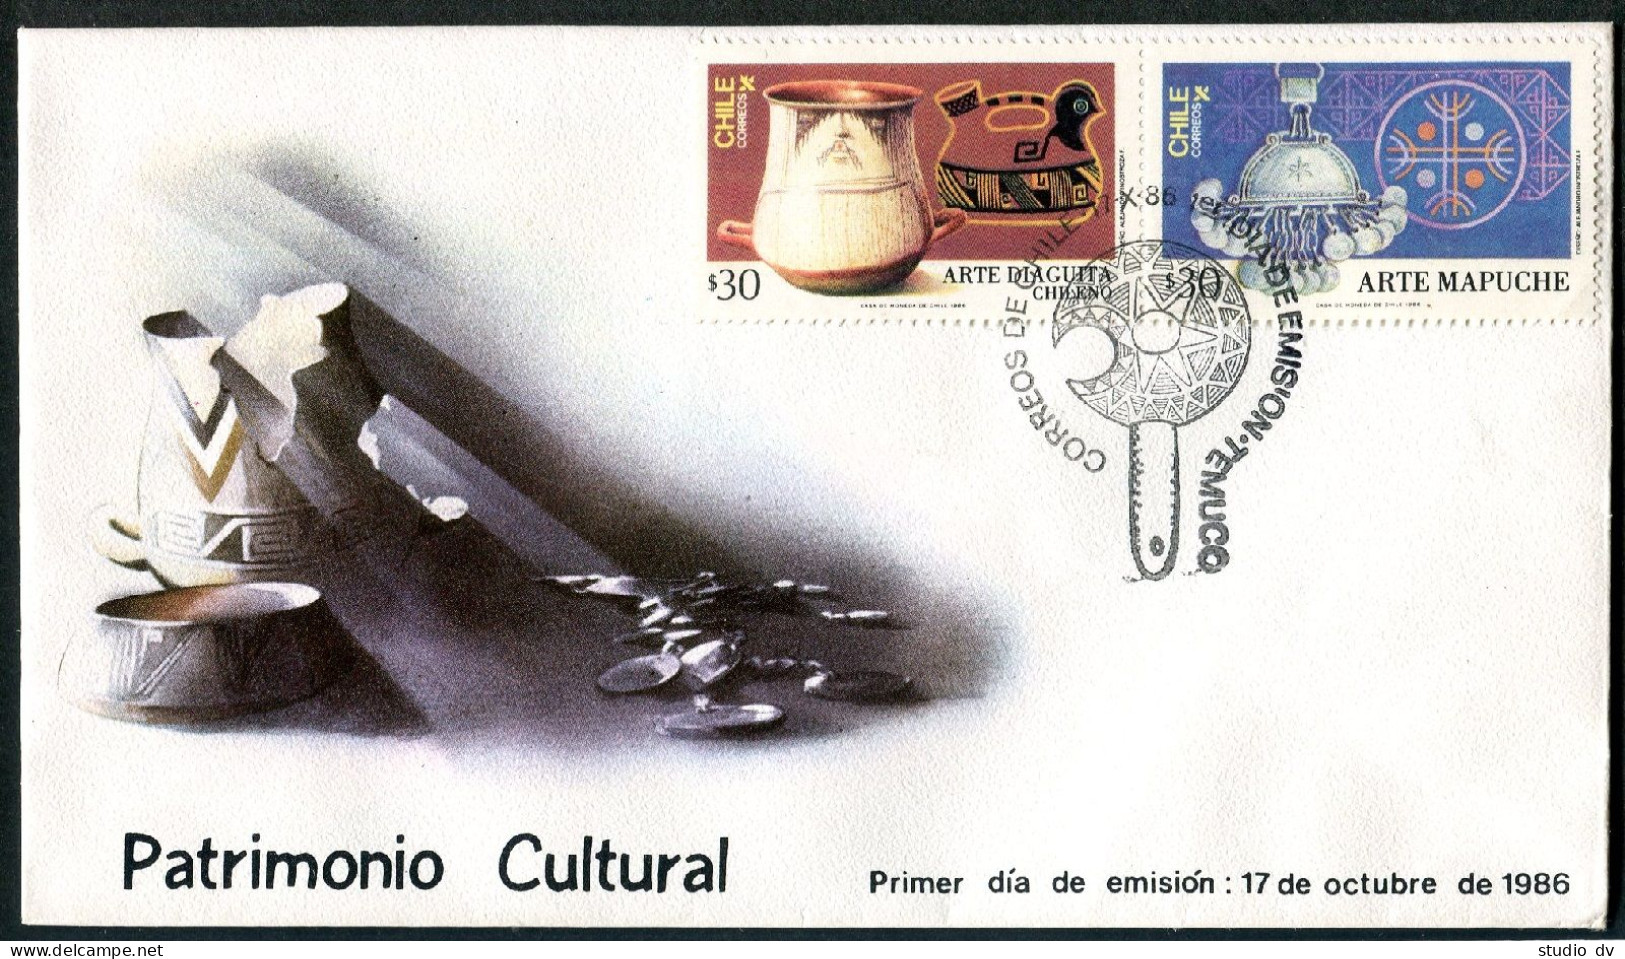 Chile 734-735a Pair, FDC. Michel 1147-1148. Art 1986: Urn, Jug, Silver Ornament. - Cile